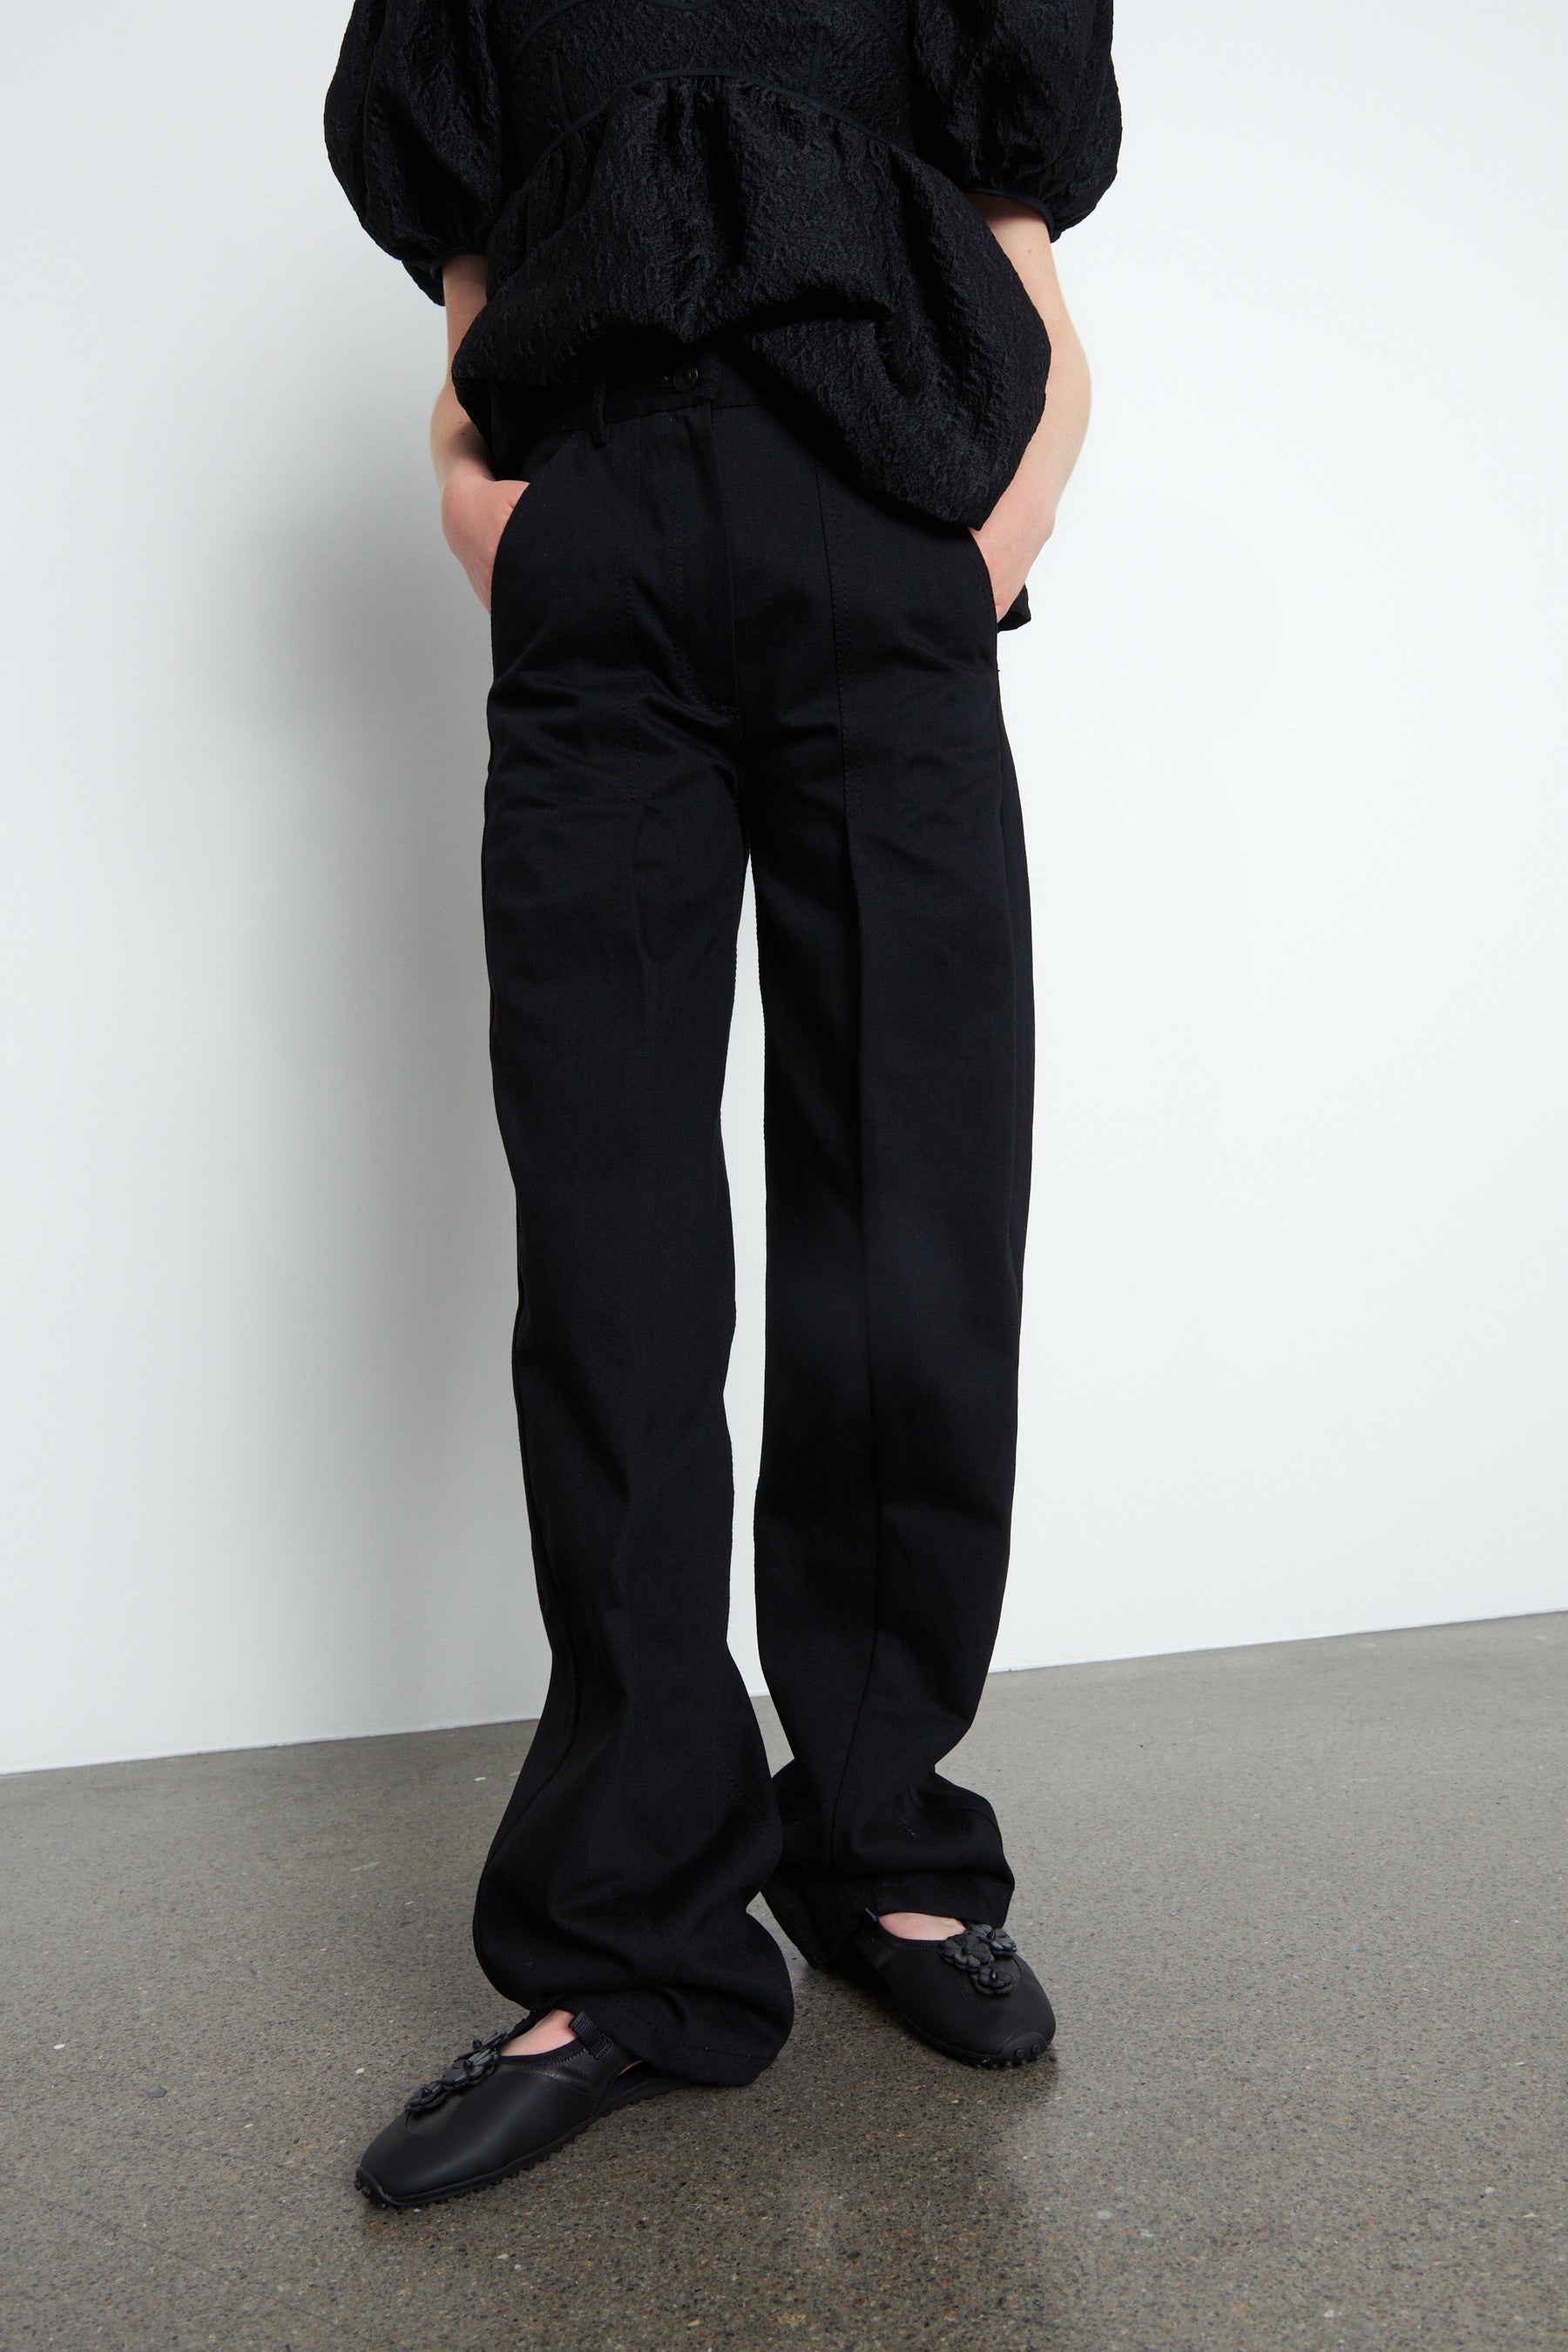 CHANEL Black Wide Leg Super High Rise Waist Layer Slacks Dress Pants 0-34  XXS | eBay